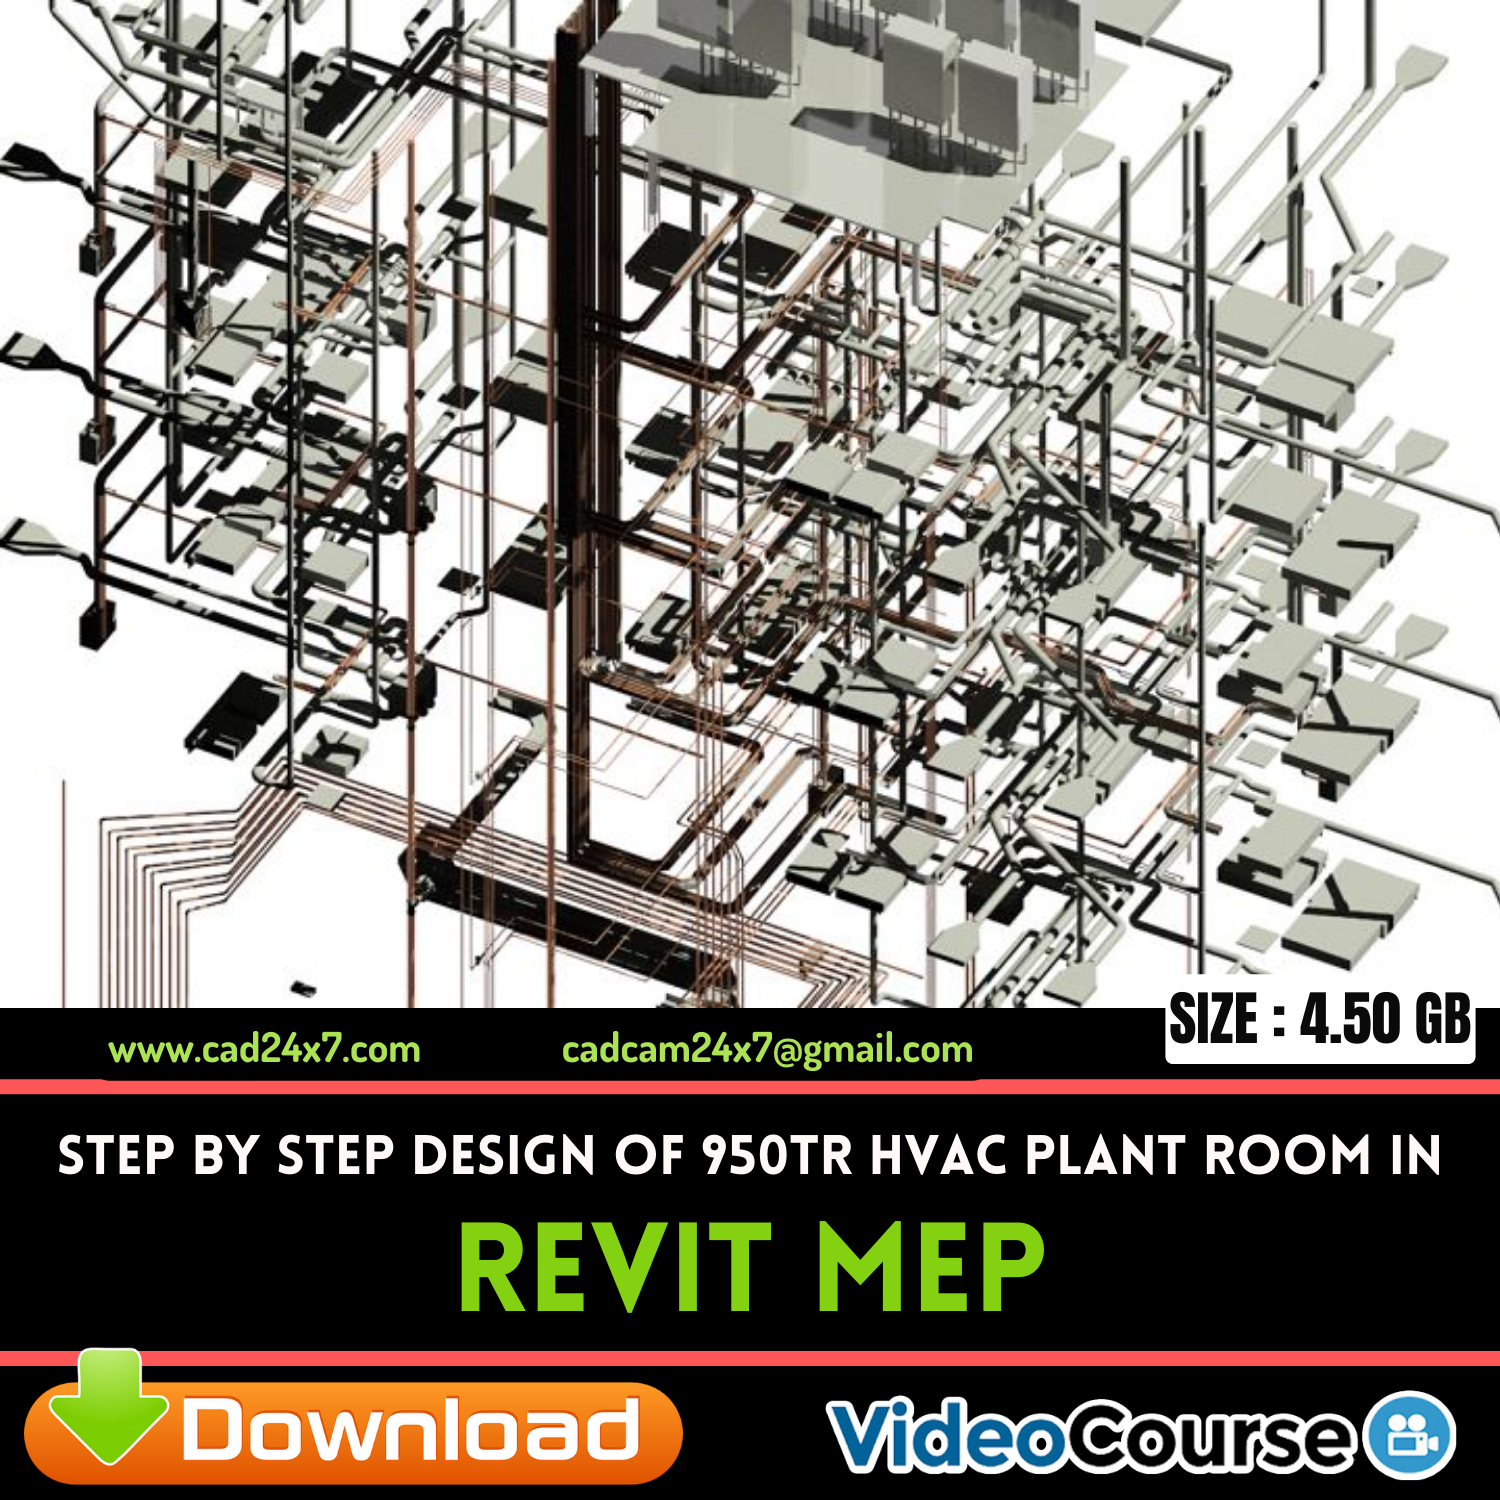 Step-by-Step-Design-of-950TR-HVAC-Plant-Room-in-Revit-MEP